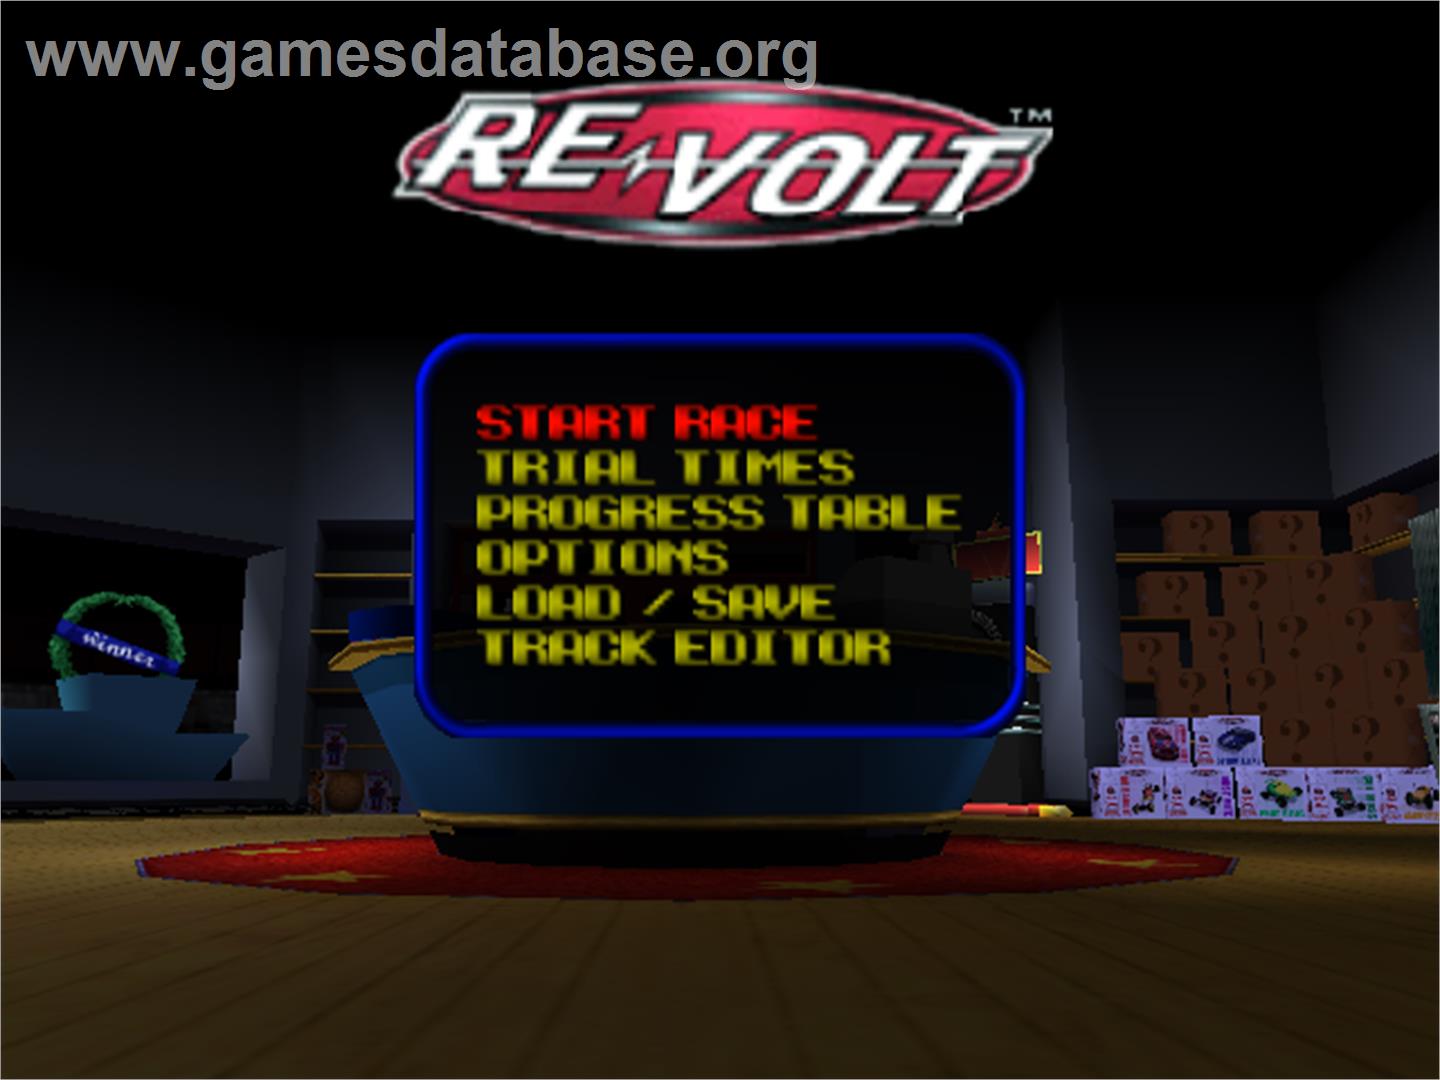 Re-Volt - Nintendo N64 - Artwork - Title Screen